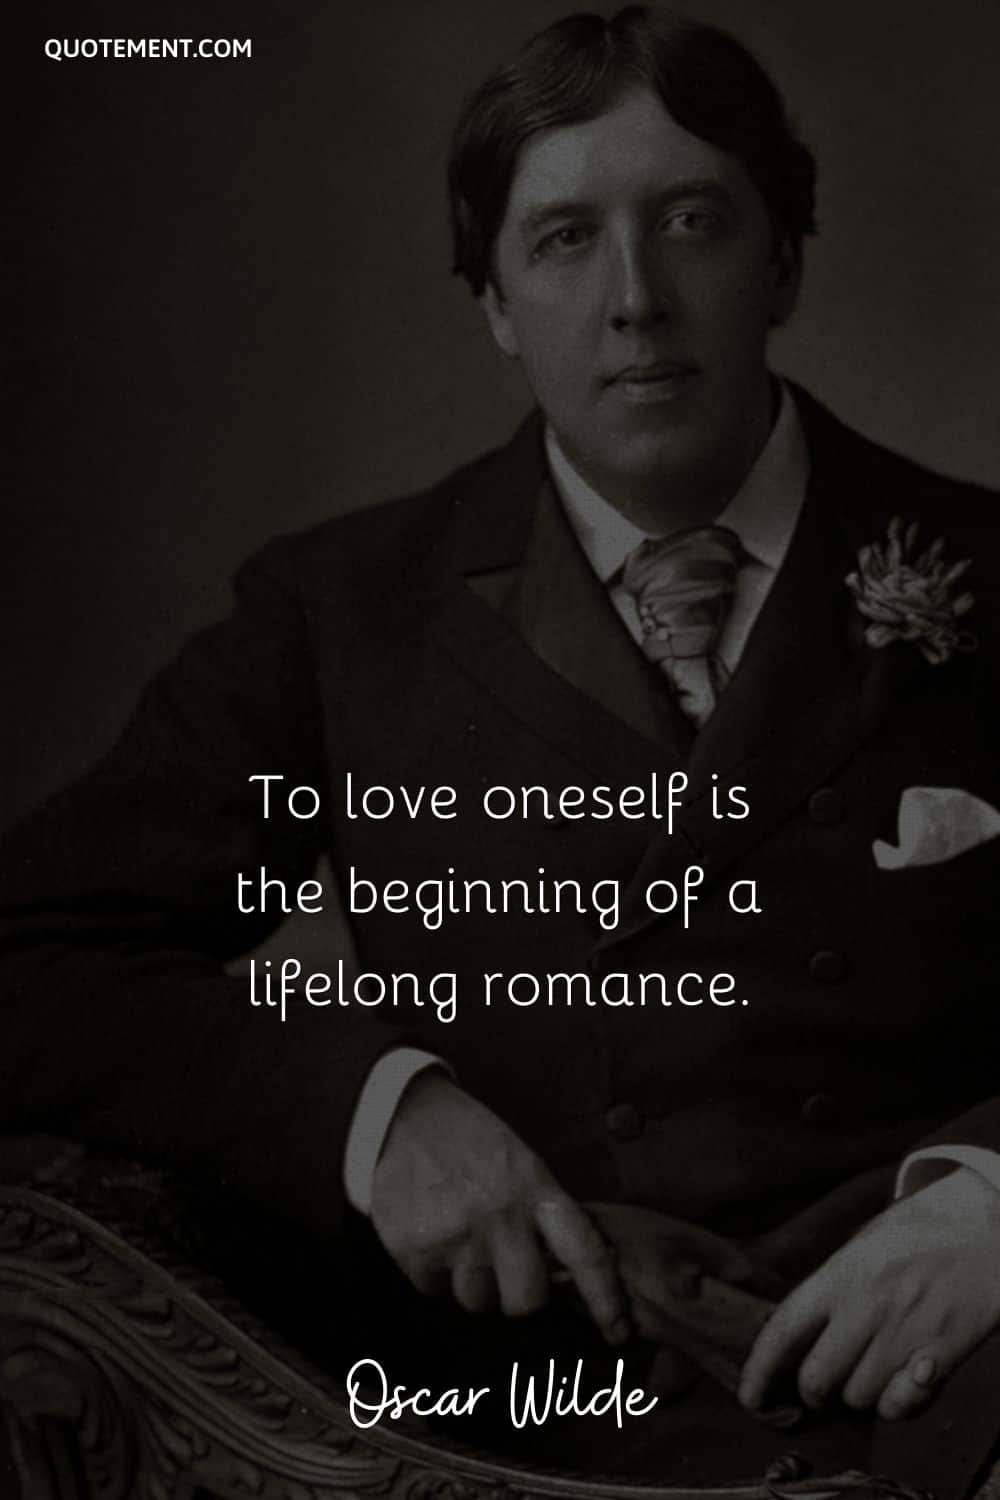 Brilliant Oscar Wilde on love and his portrait.